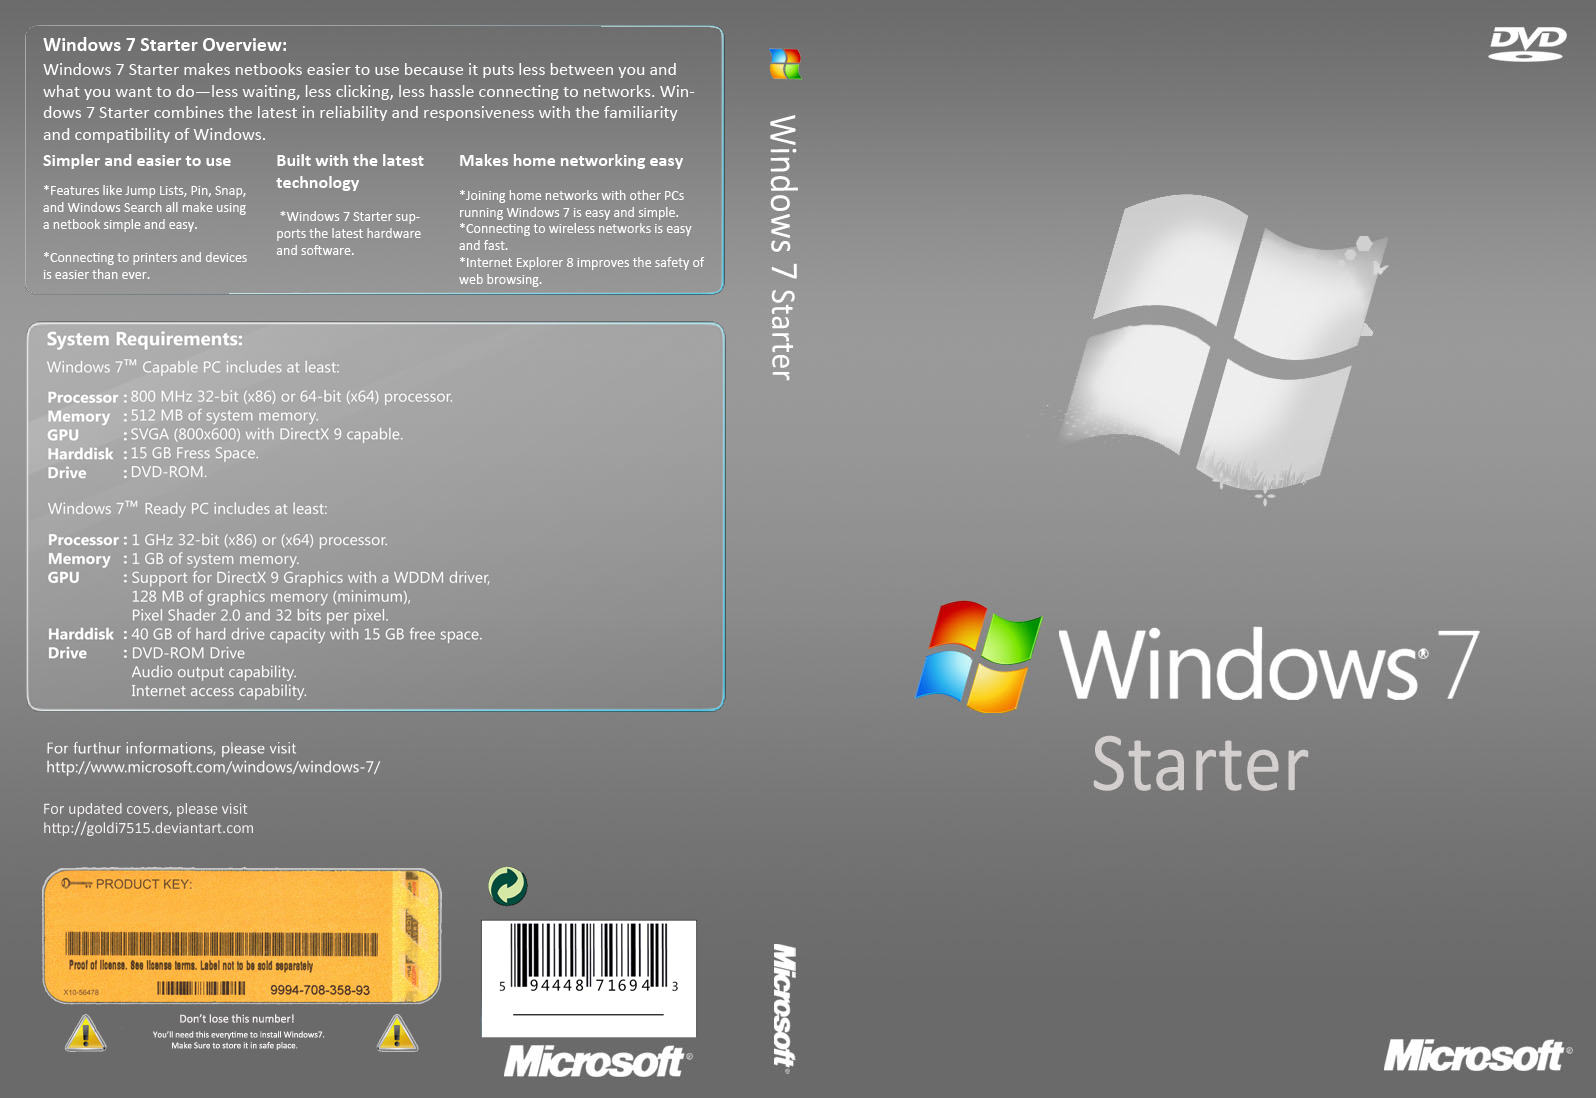 windows 7 service pack 3 download 32 bit